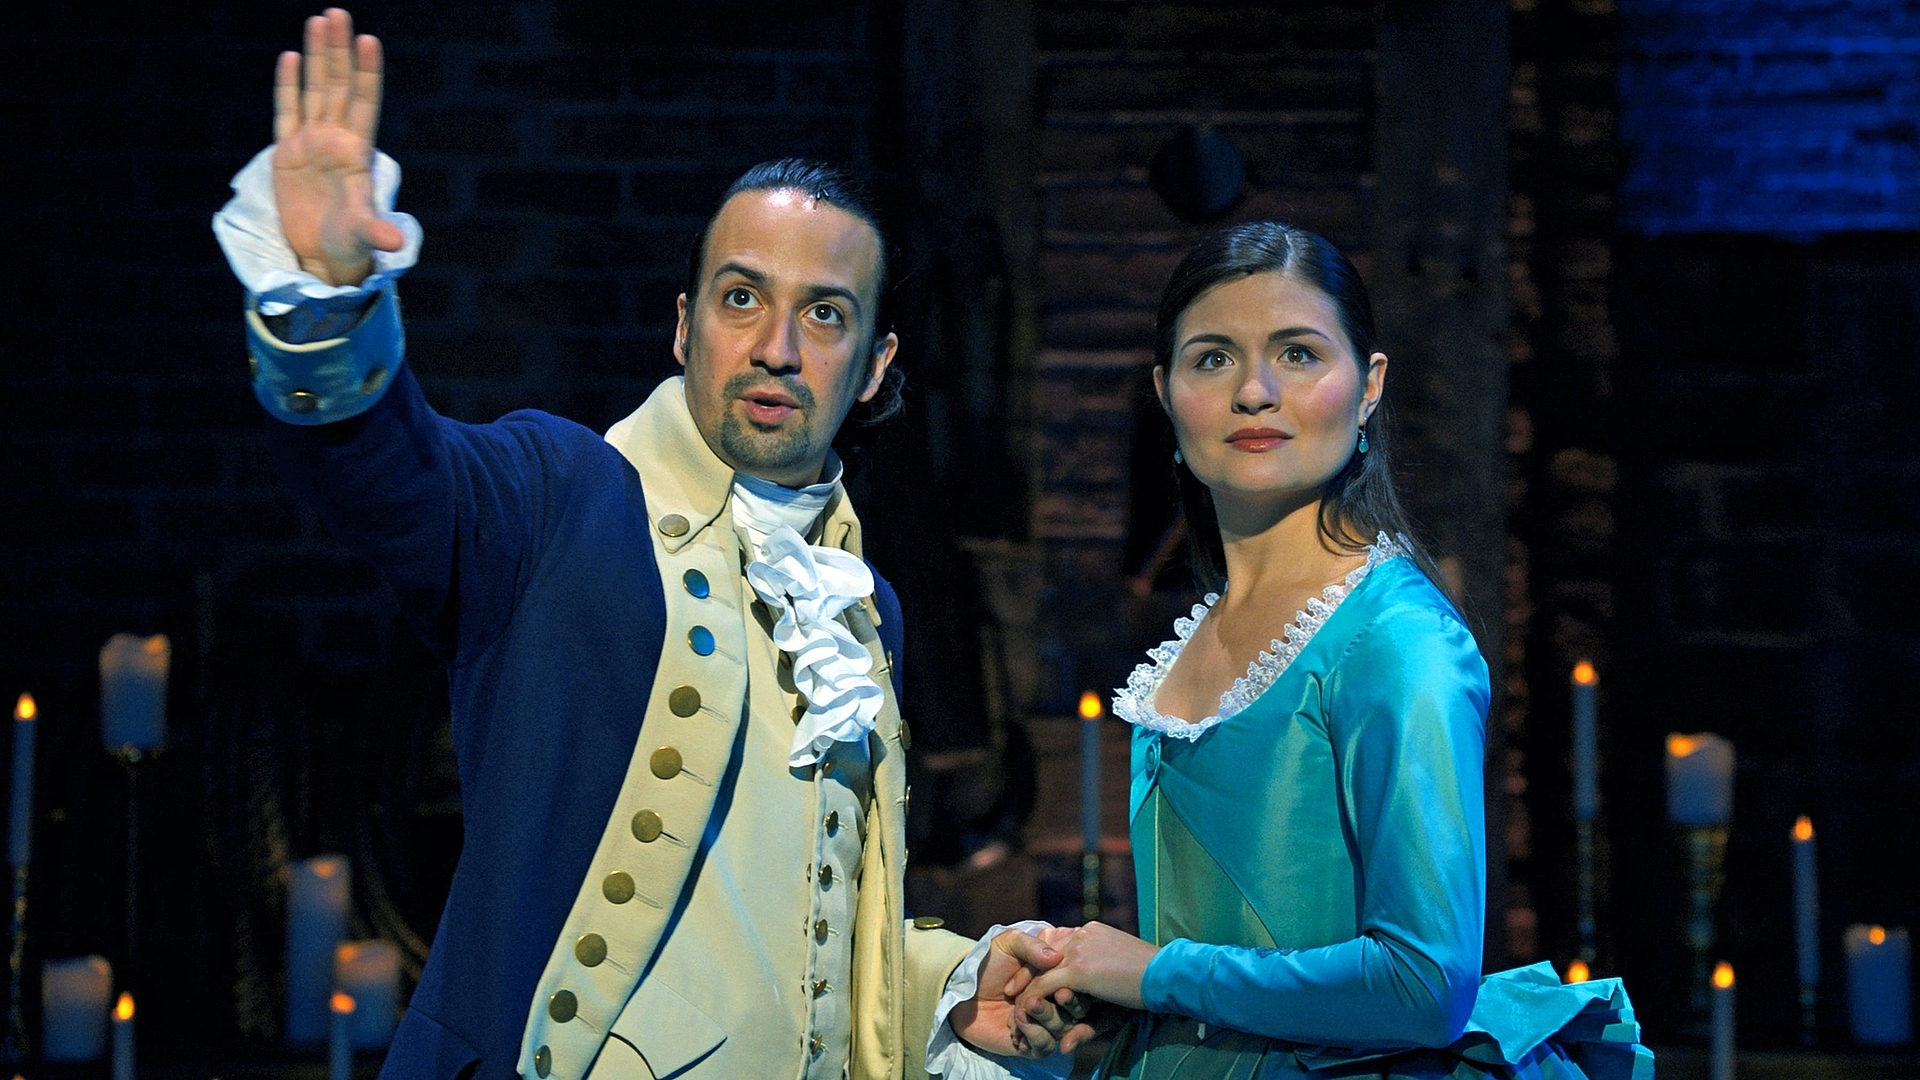 The musical "Hamilton" brings the King David story to life